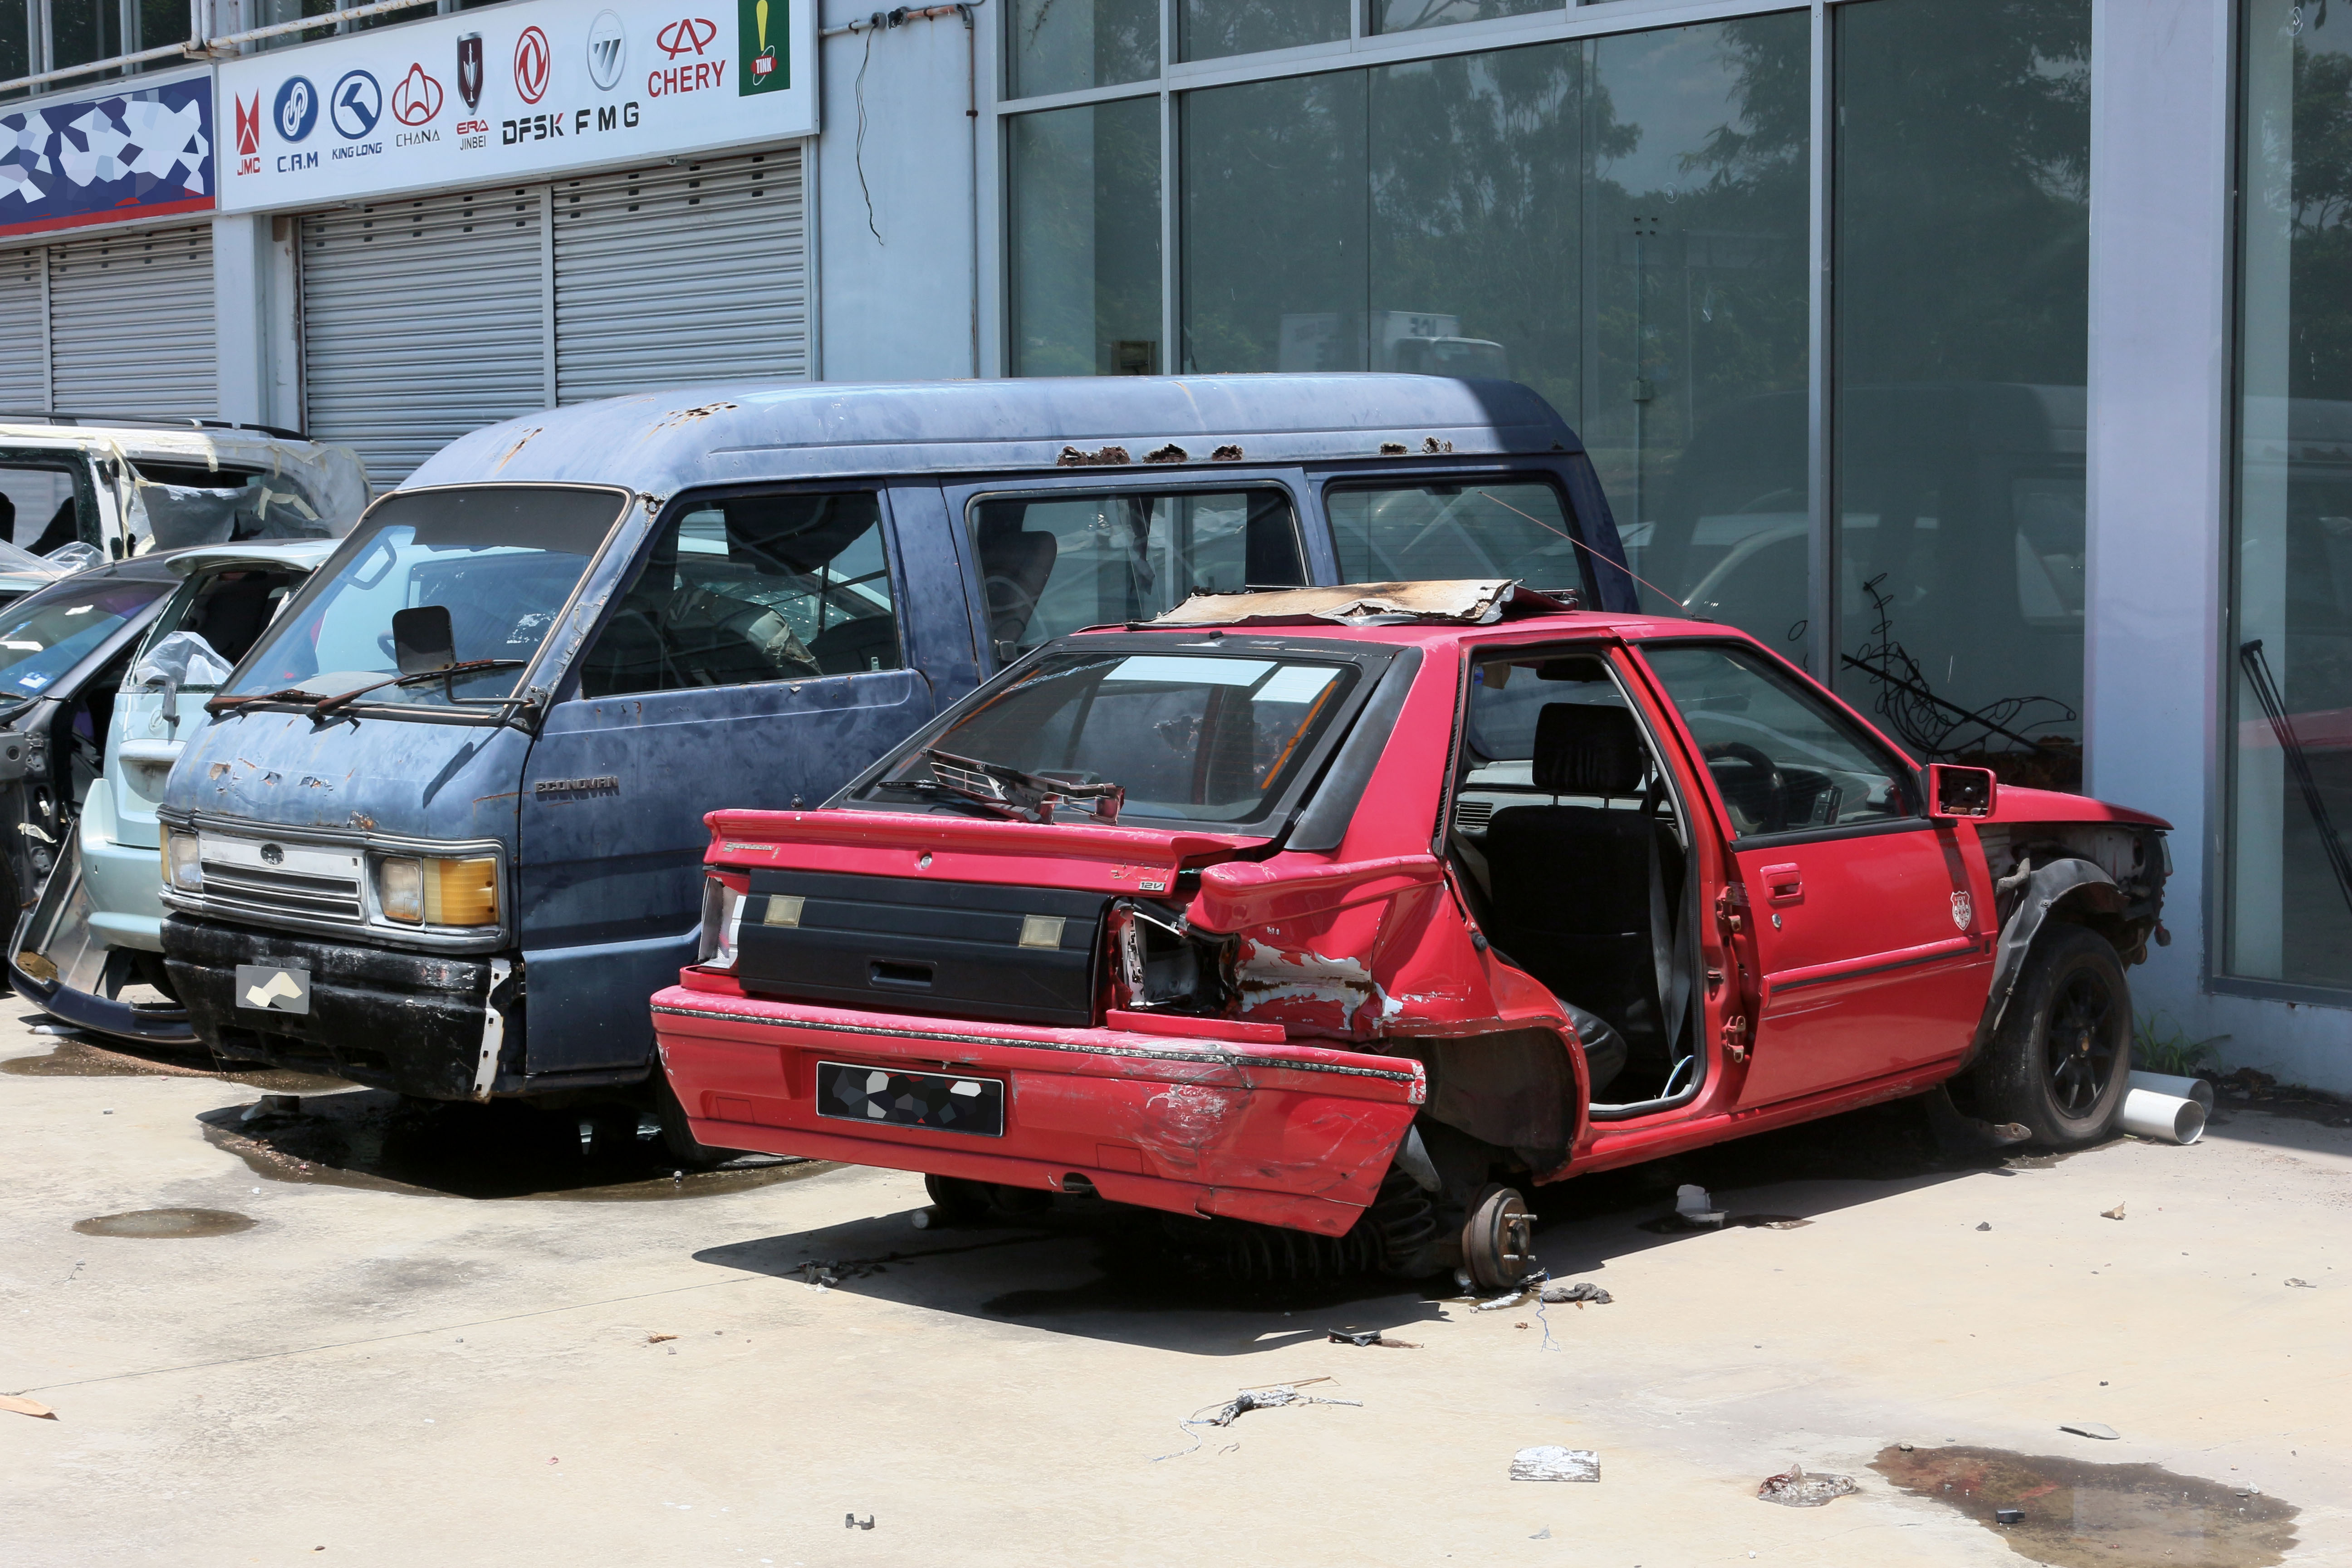 The end of a Malaysian Proton Saga Iswara Aeroback